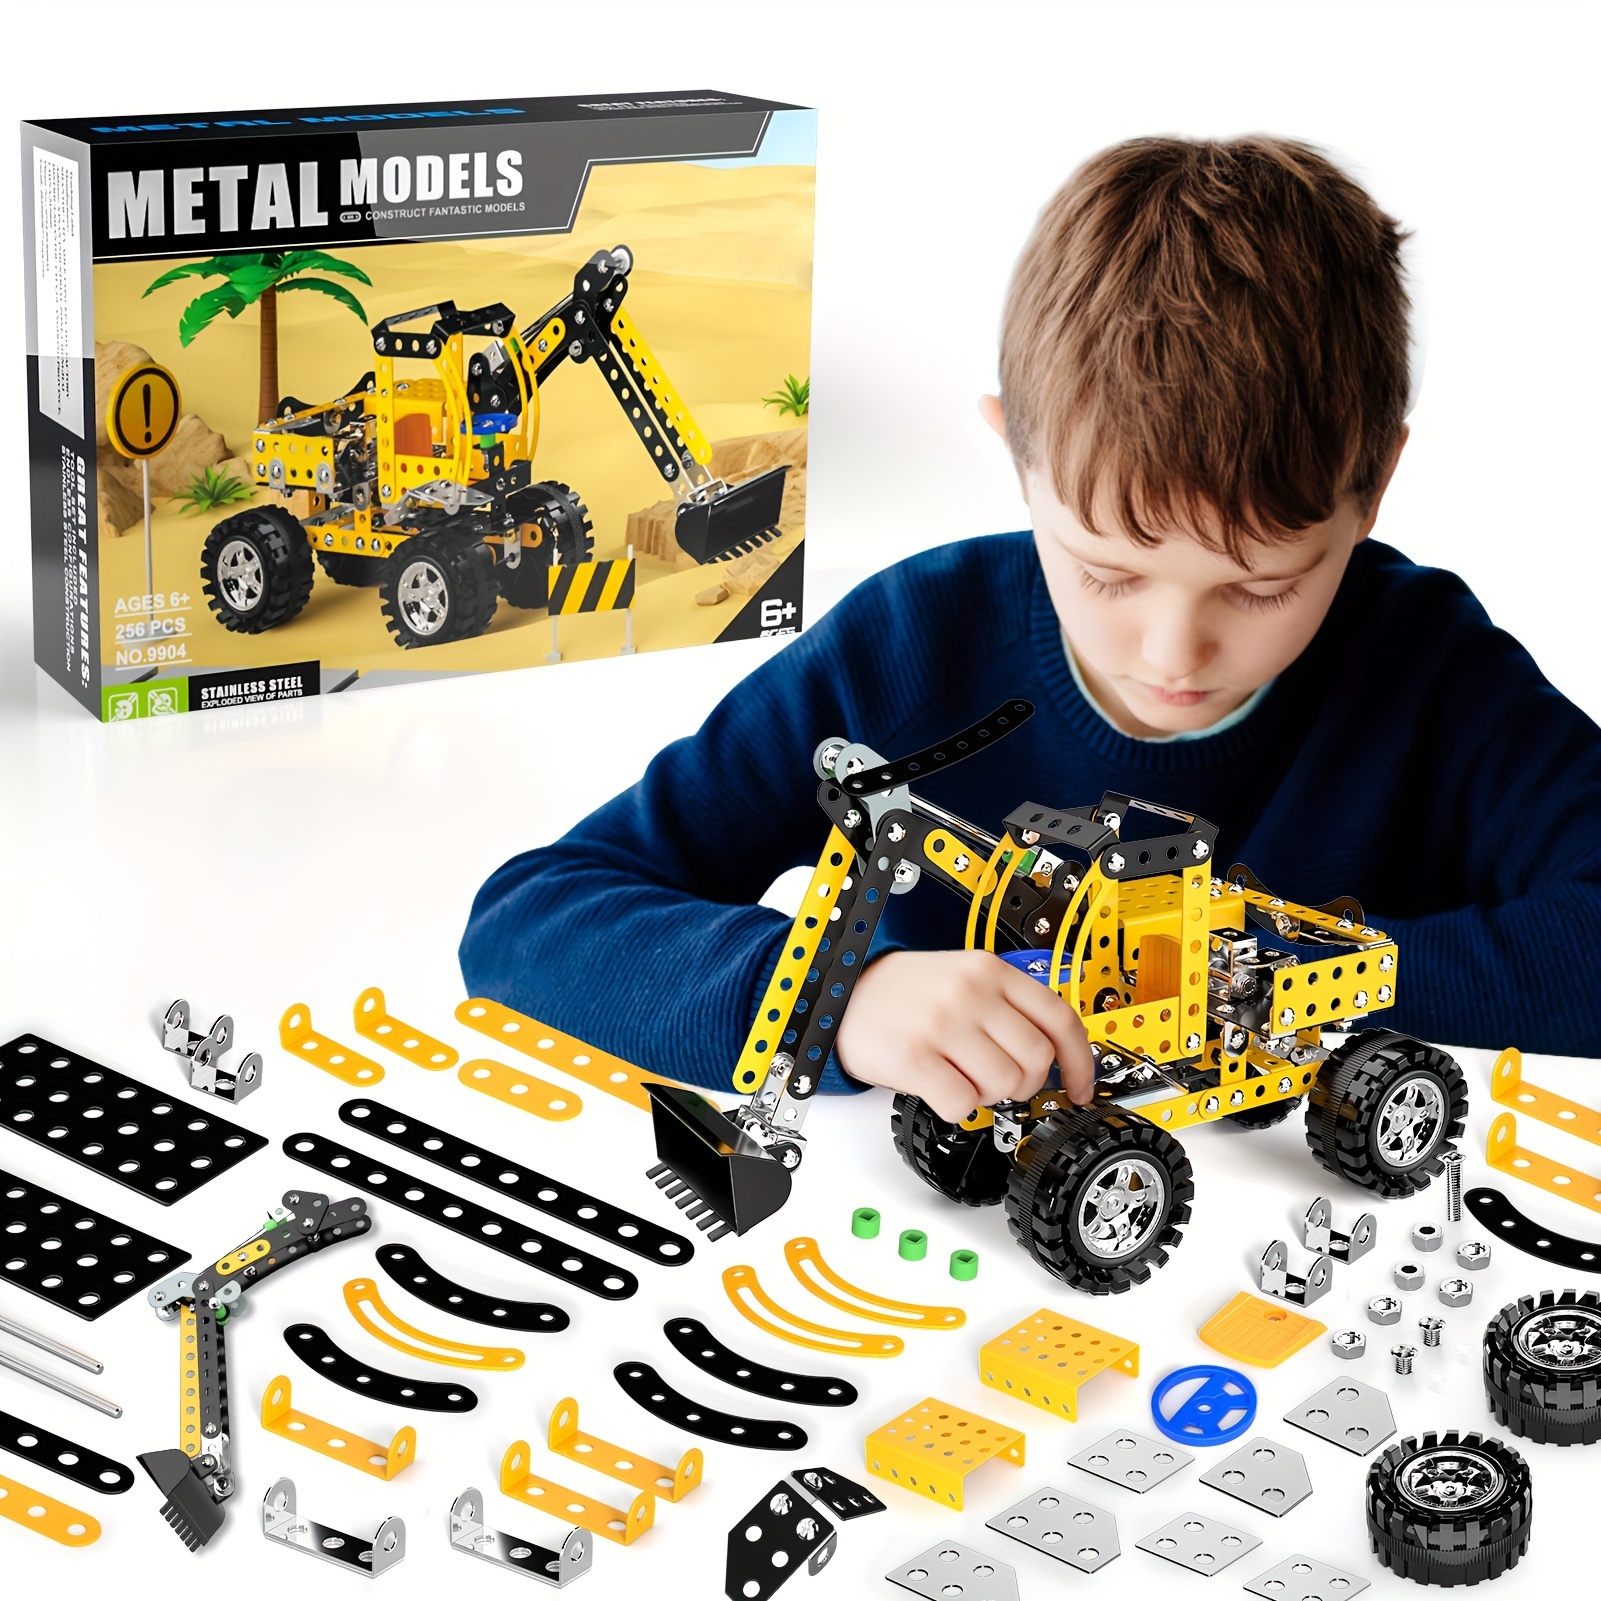 

Stem Building Projects Toys For Kids Boys 8 9 10 11 12 Year Old, 256 Pcs Metal Building Construction Model Kit, Building Blocks Diy Toys